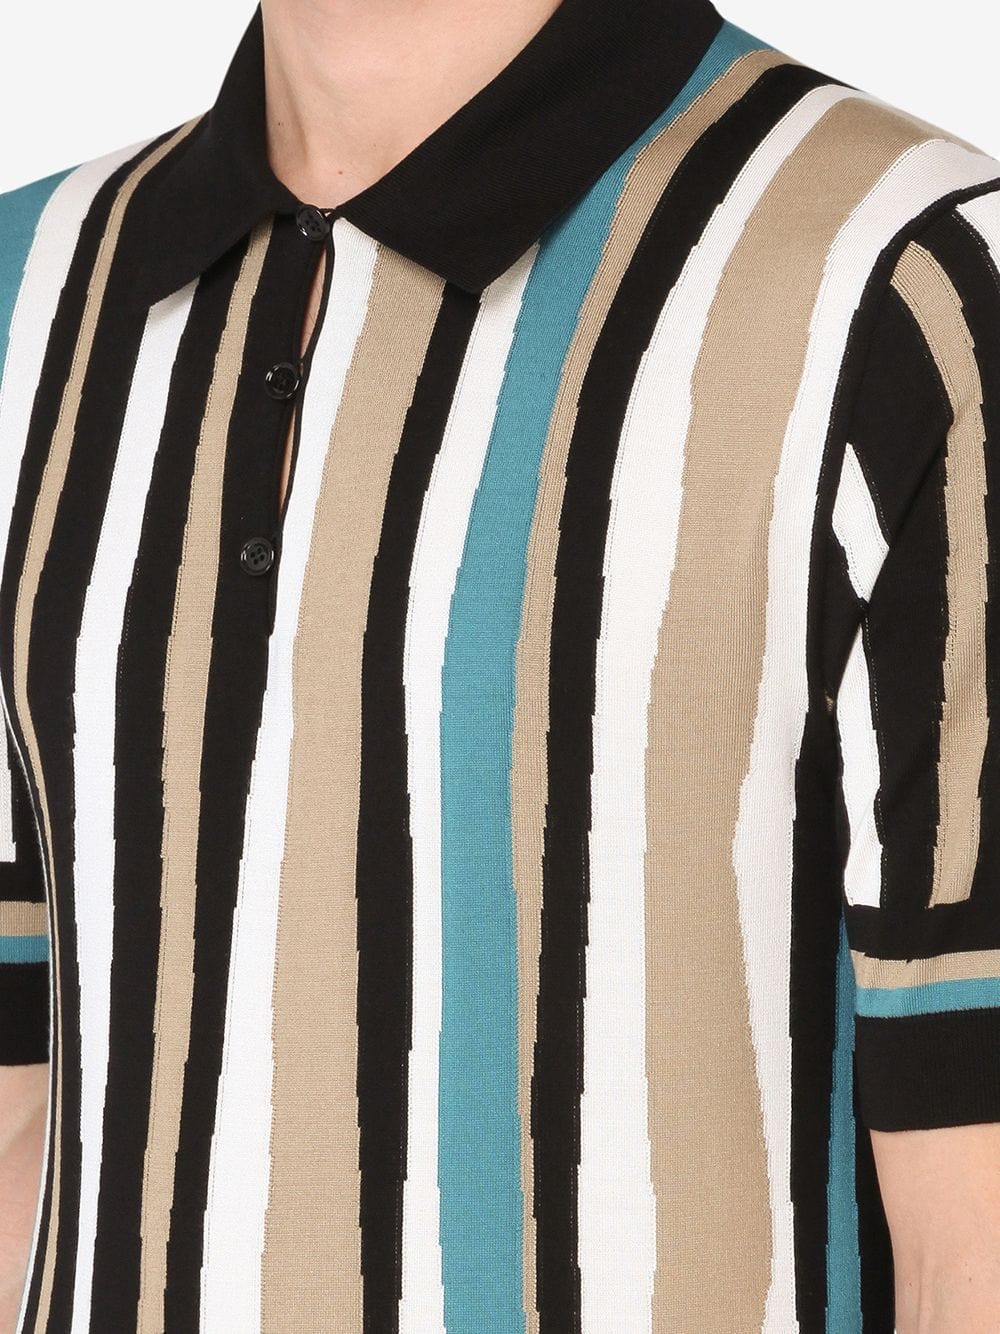 Dolce & Gabbana Vertical-Stripe Short-Sleeve Polo Shirt